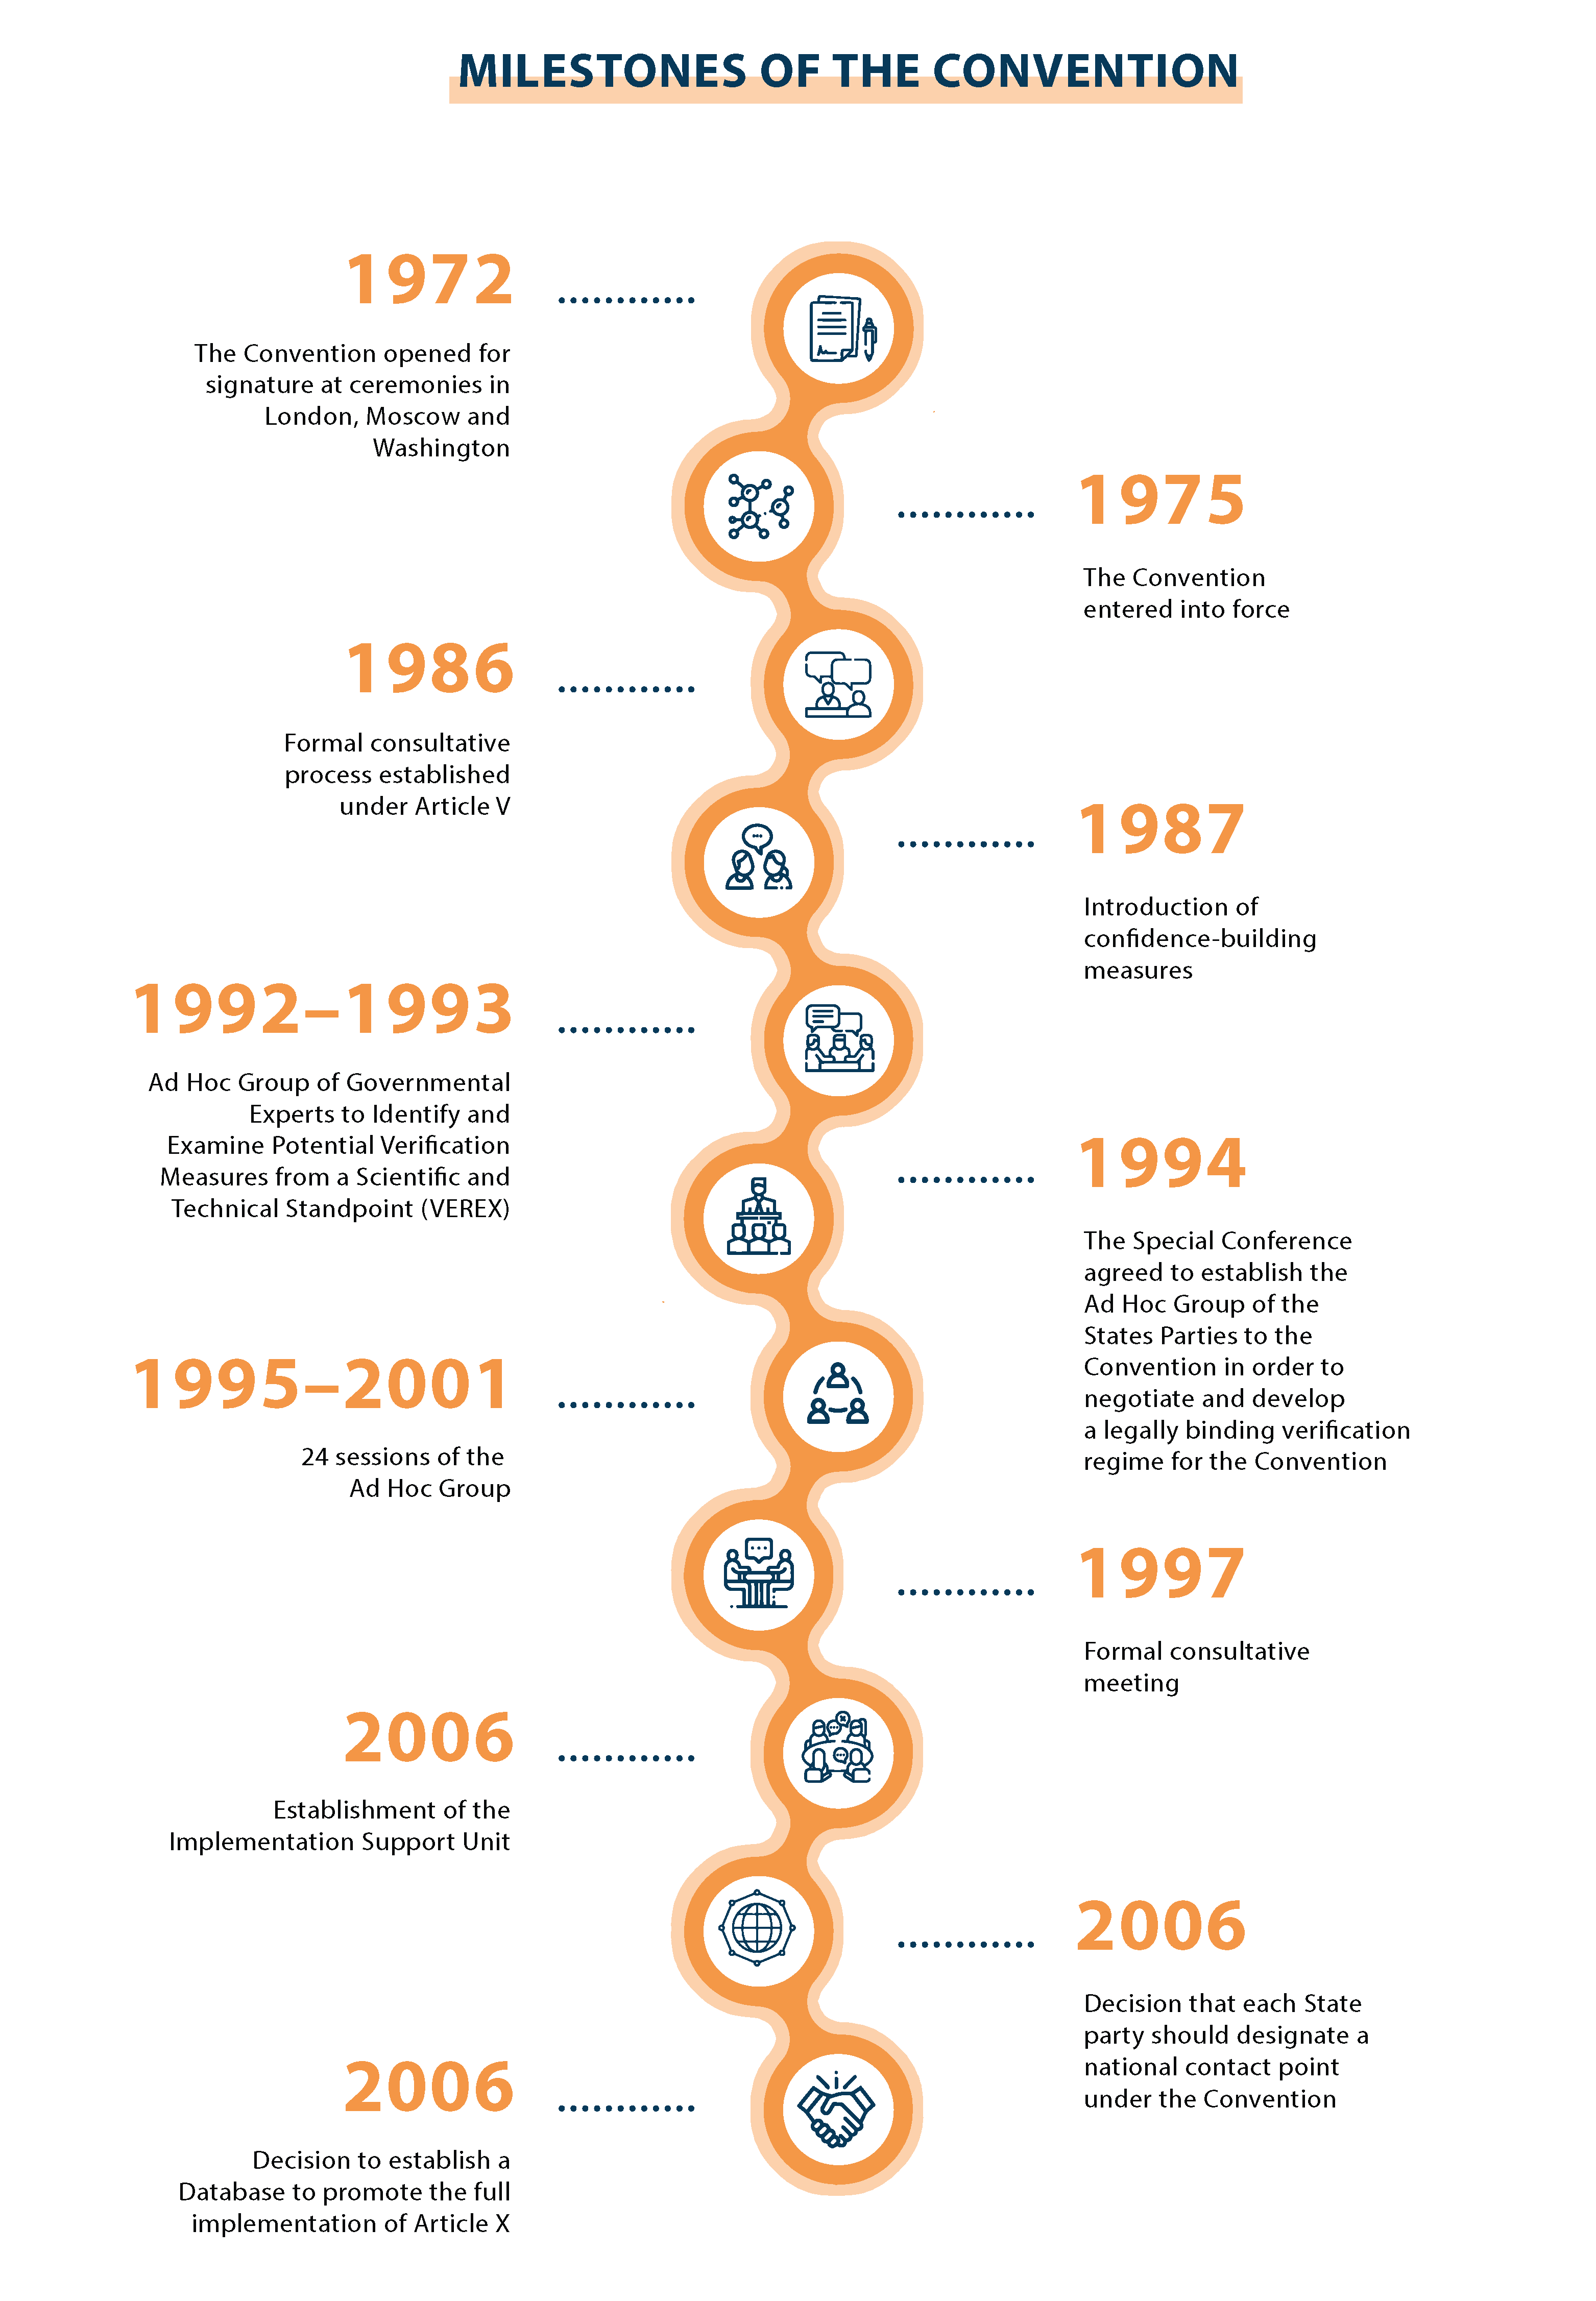 Diagram of milestones from 1972 to 2006